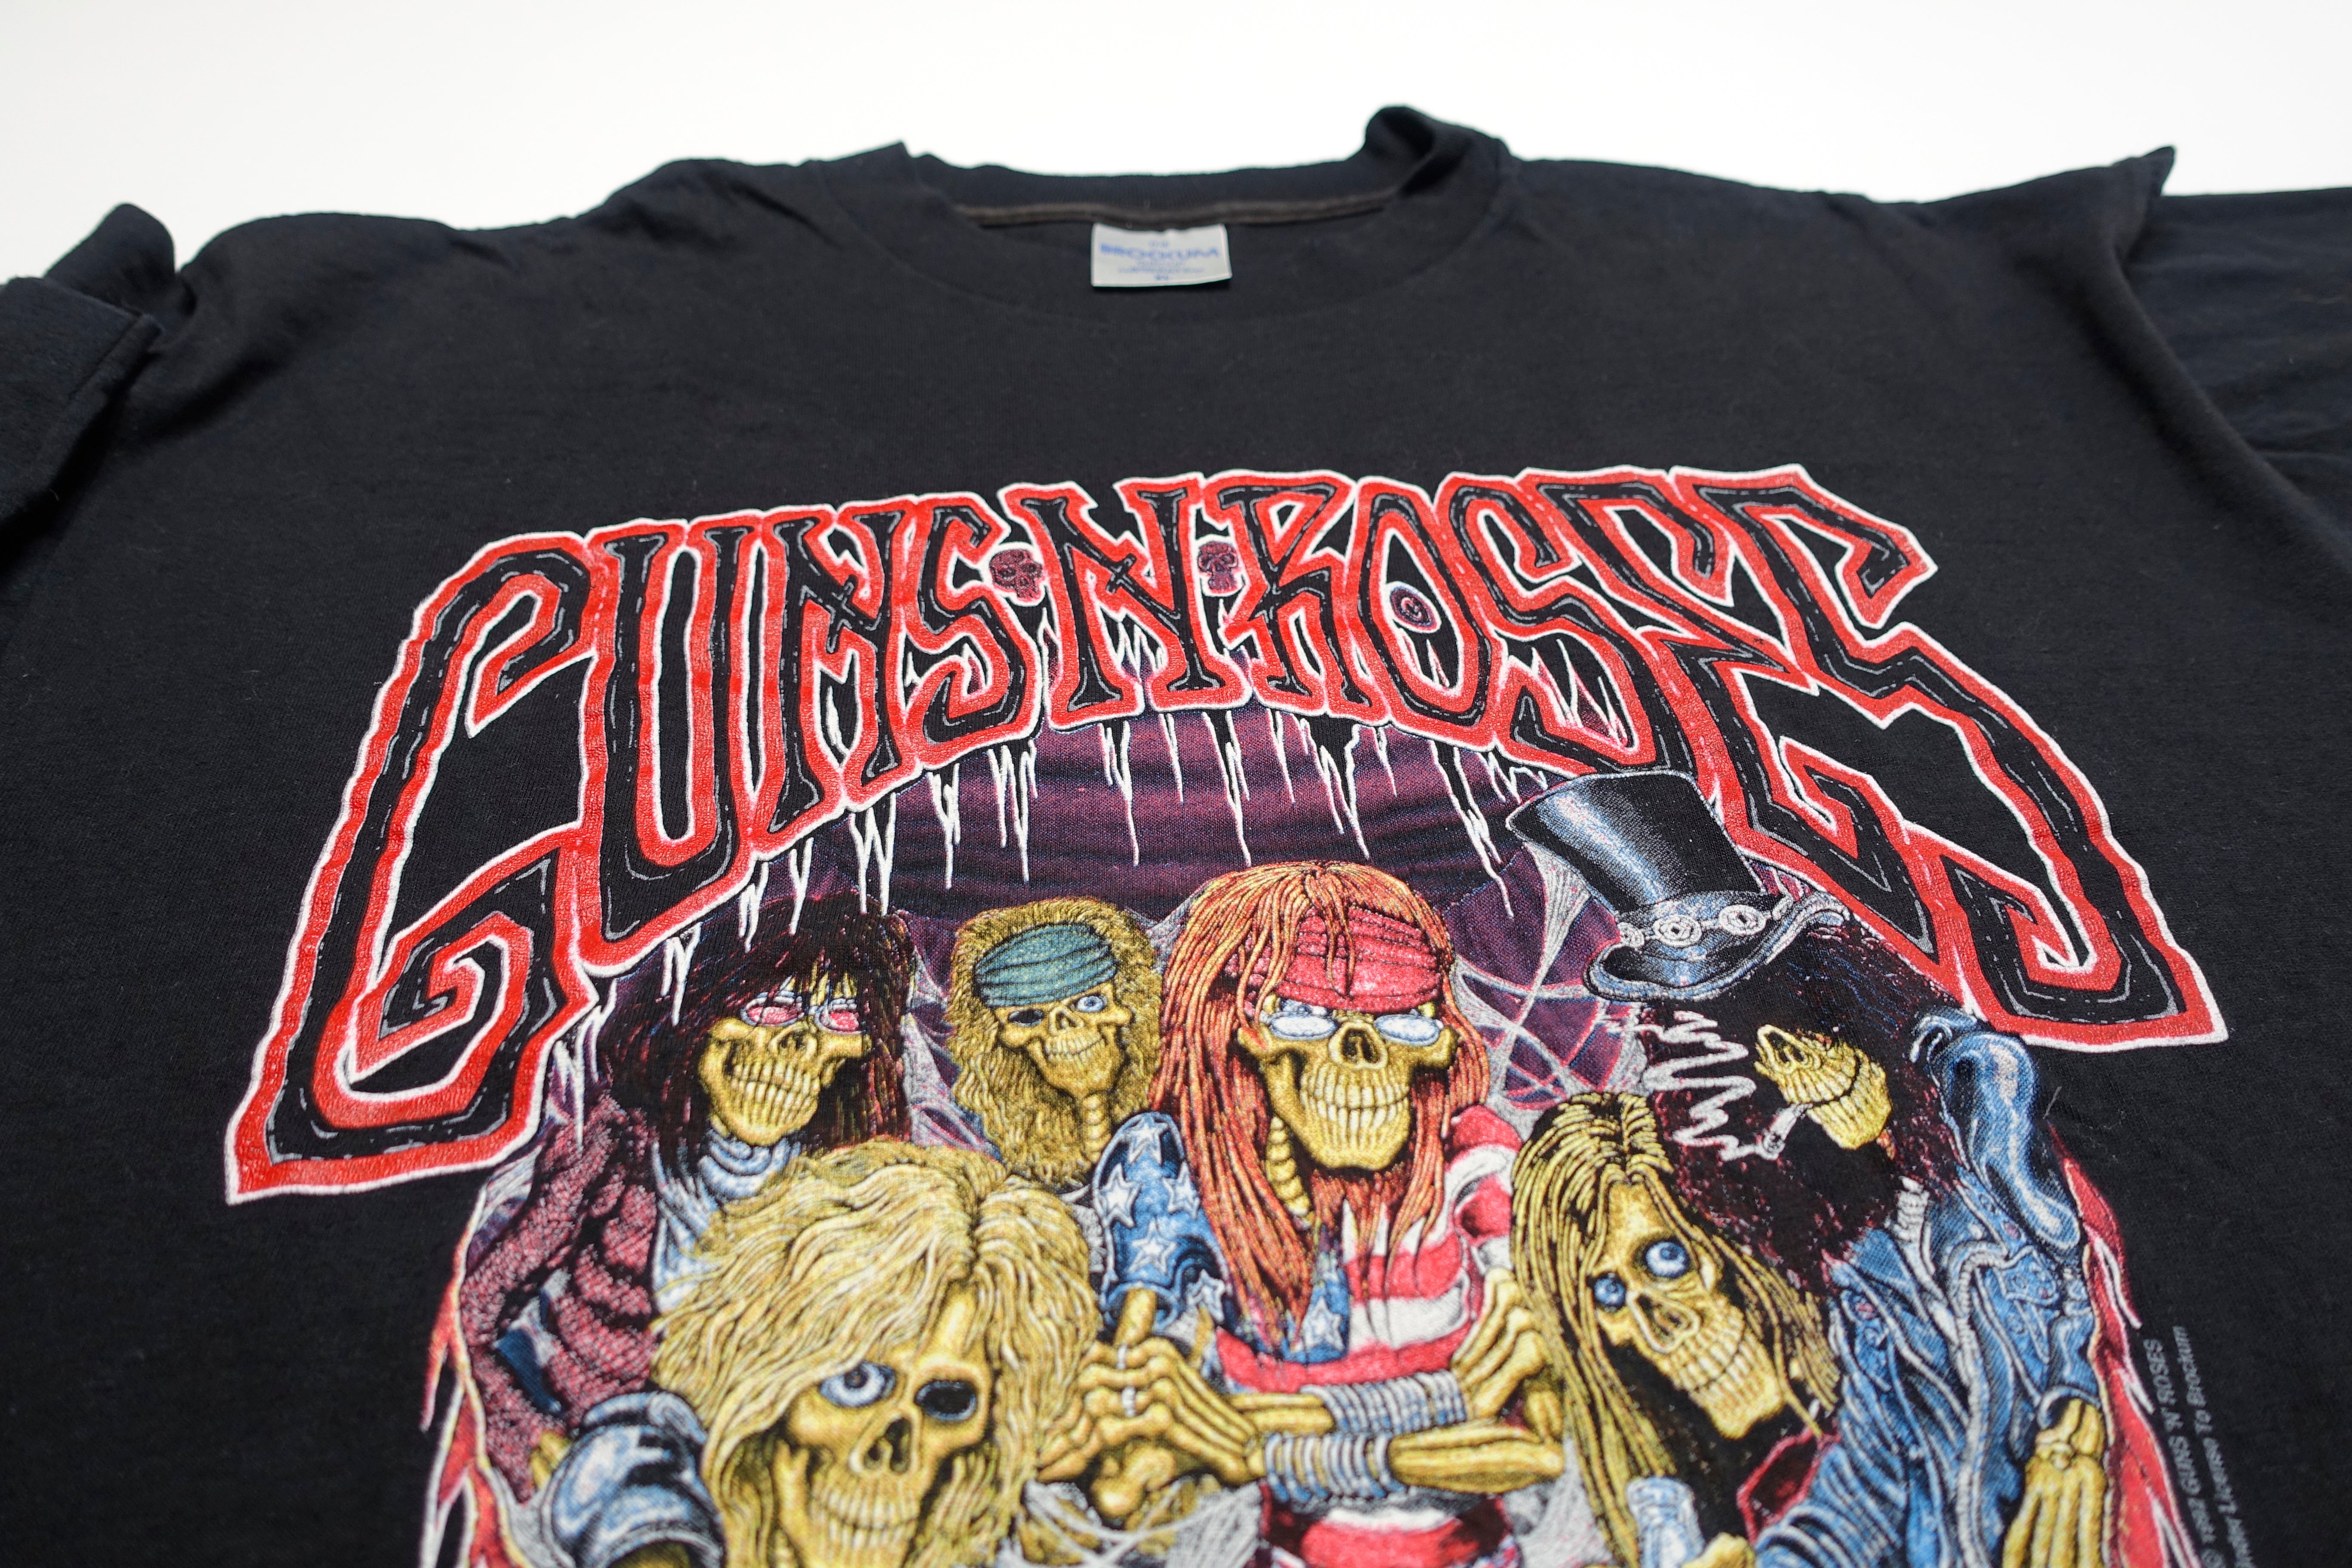 Guns N' Roses - Use Your Illusion Tour 1991-1992 Tour Shirt Size XL